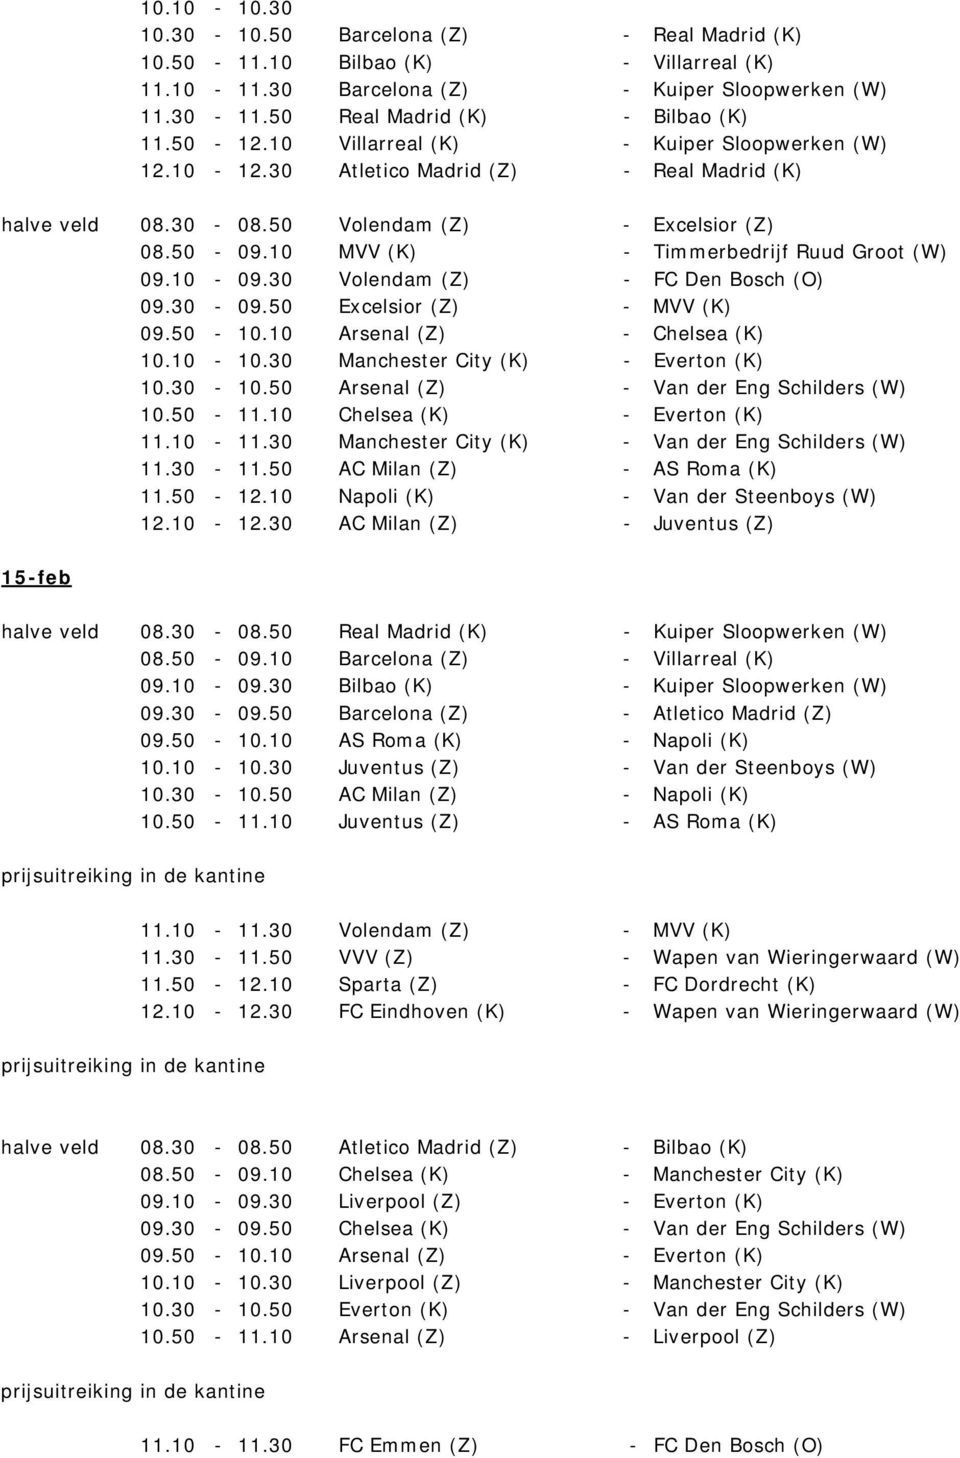 10-09.30 Volendam (Z) - FC Den Bosch (O) 09.30-09.50 Excelsior (Z) - MVV (K) 09.50-10.10 Arsenal (Z) - Chelsea (K) 10.10-10.30 Manchester City (K) - Everton (K) 10.30-10.